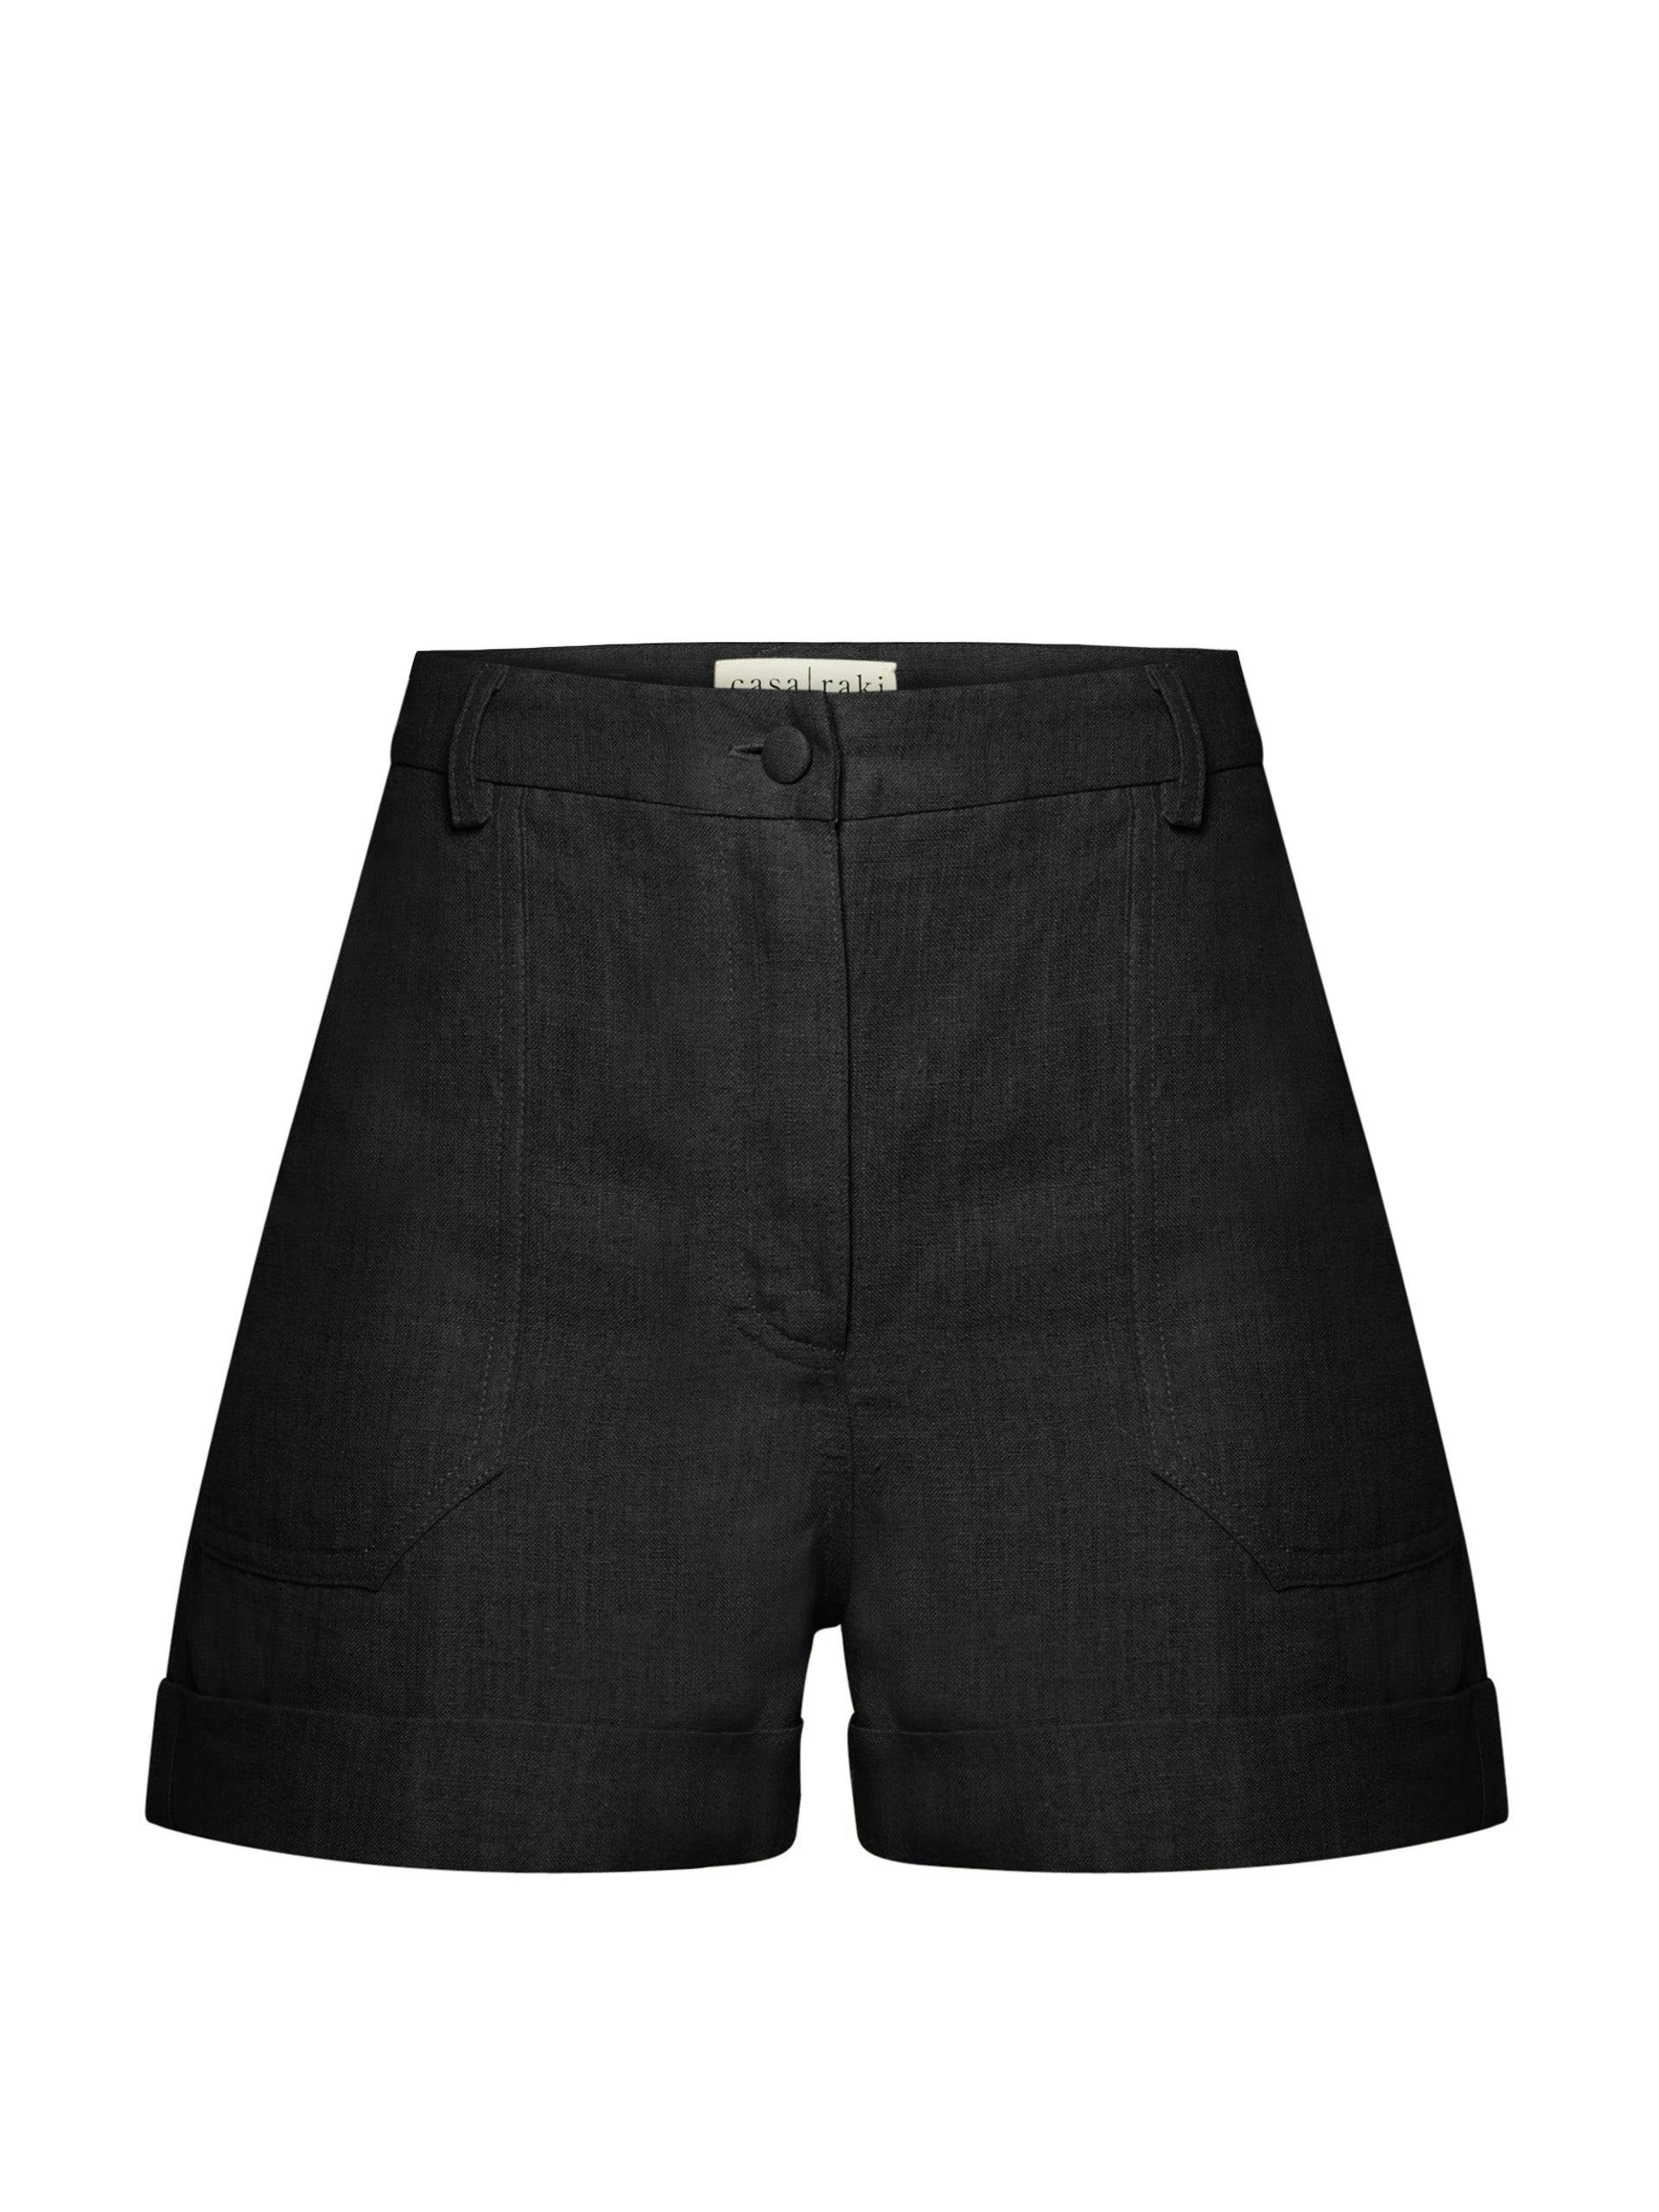 Black Augusta shorts